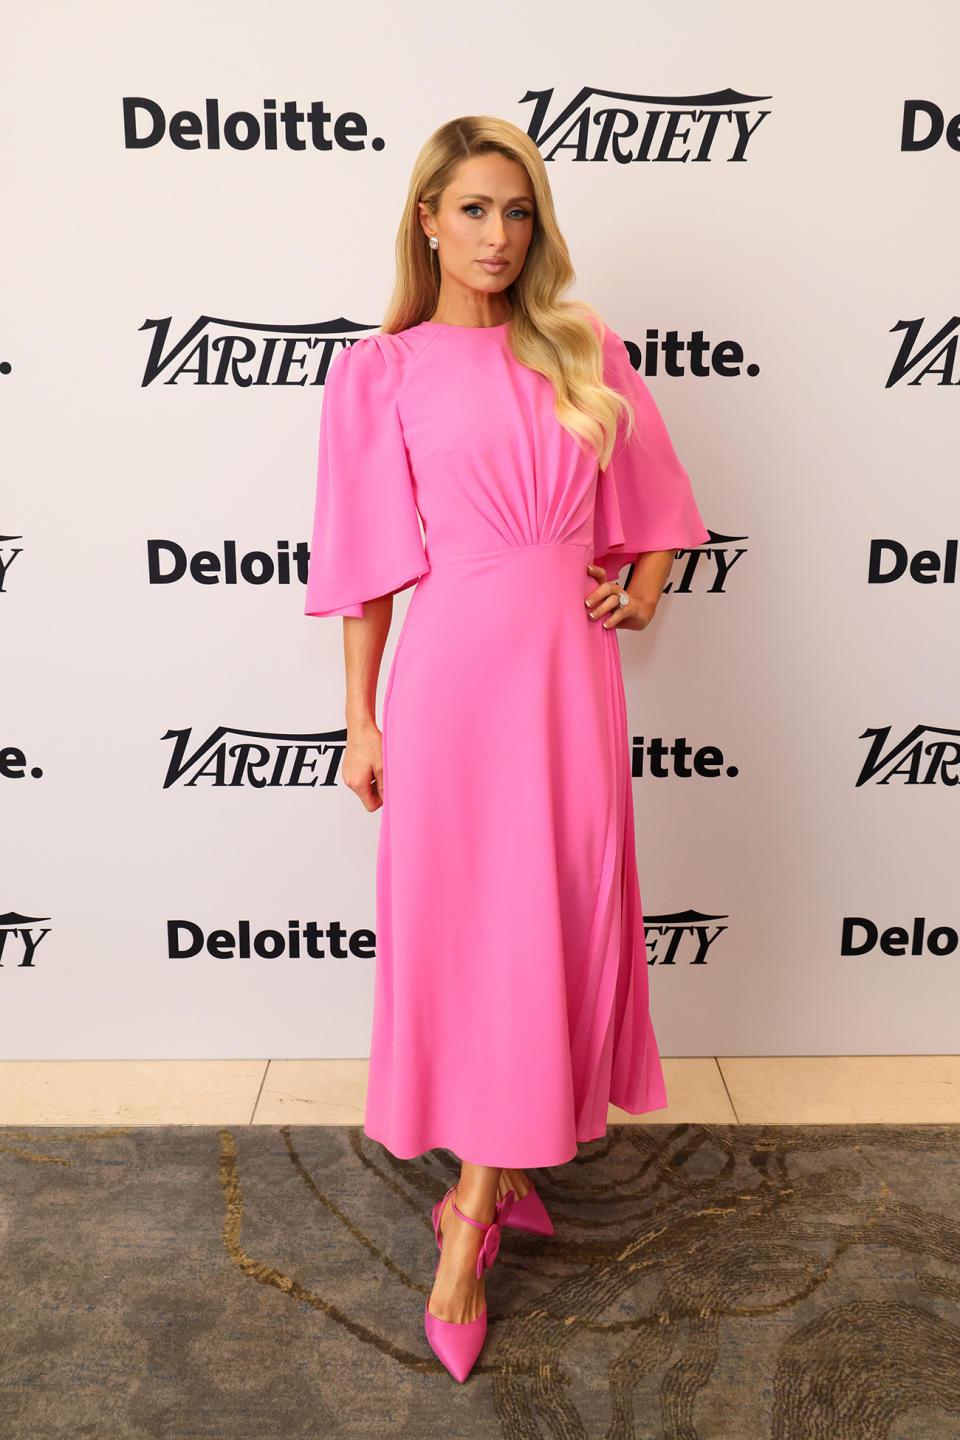 Paris Hilton wears pink Sam Edelman stilettos Variety Entertainment Marketing Summit at The Beverly Hilton on April 24 in Beverly Hills, California.